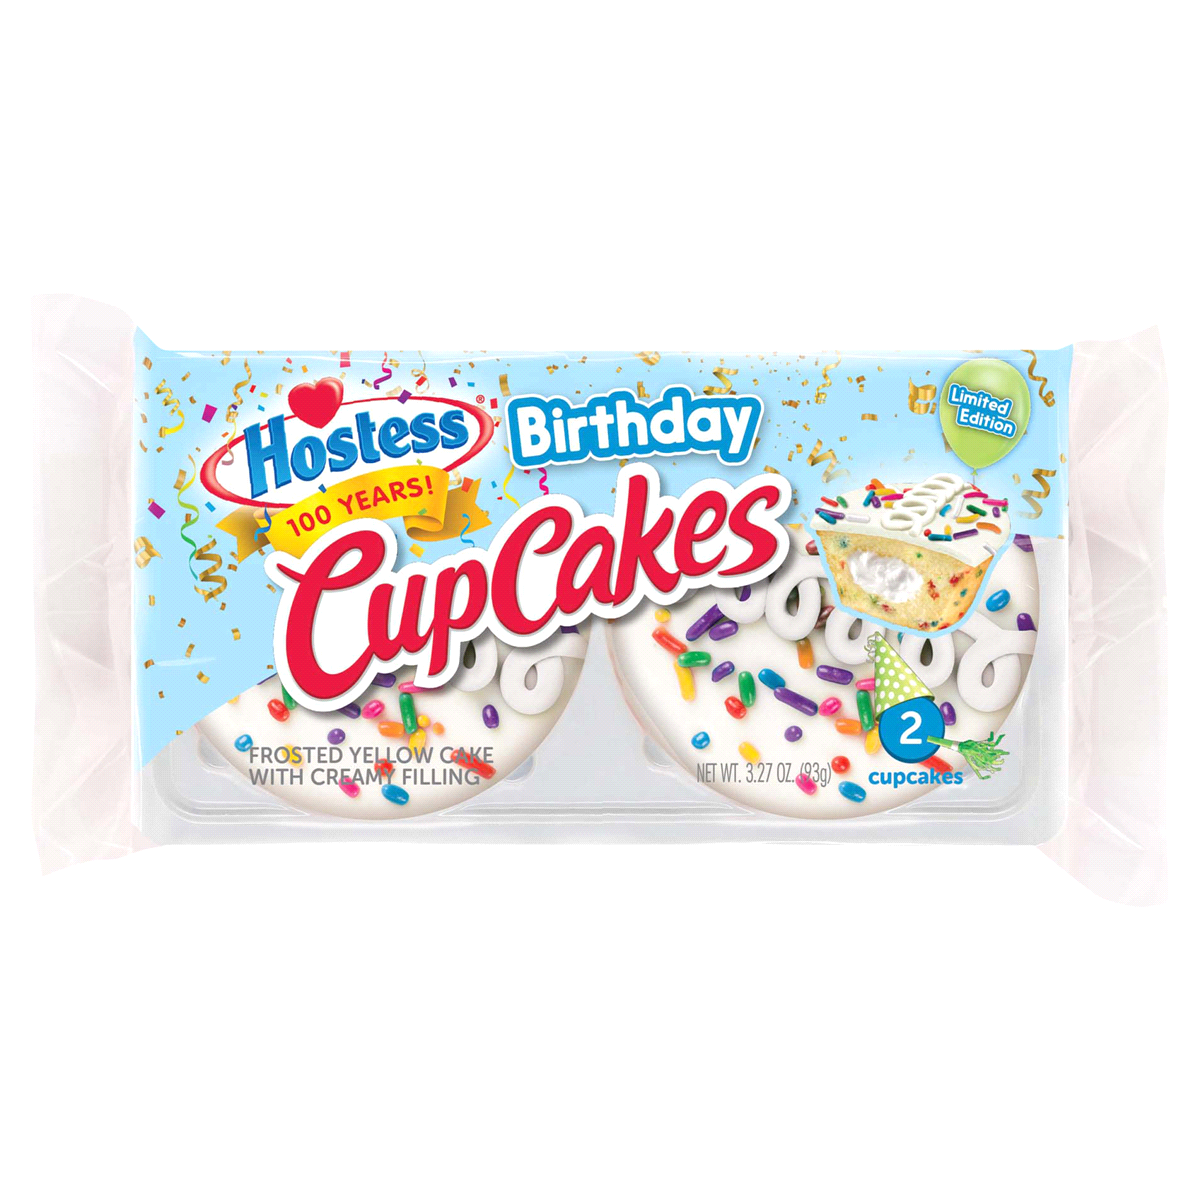 Hostess Birthday Cupcakes -2 Pack